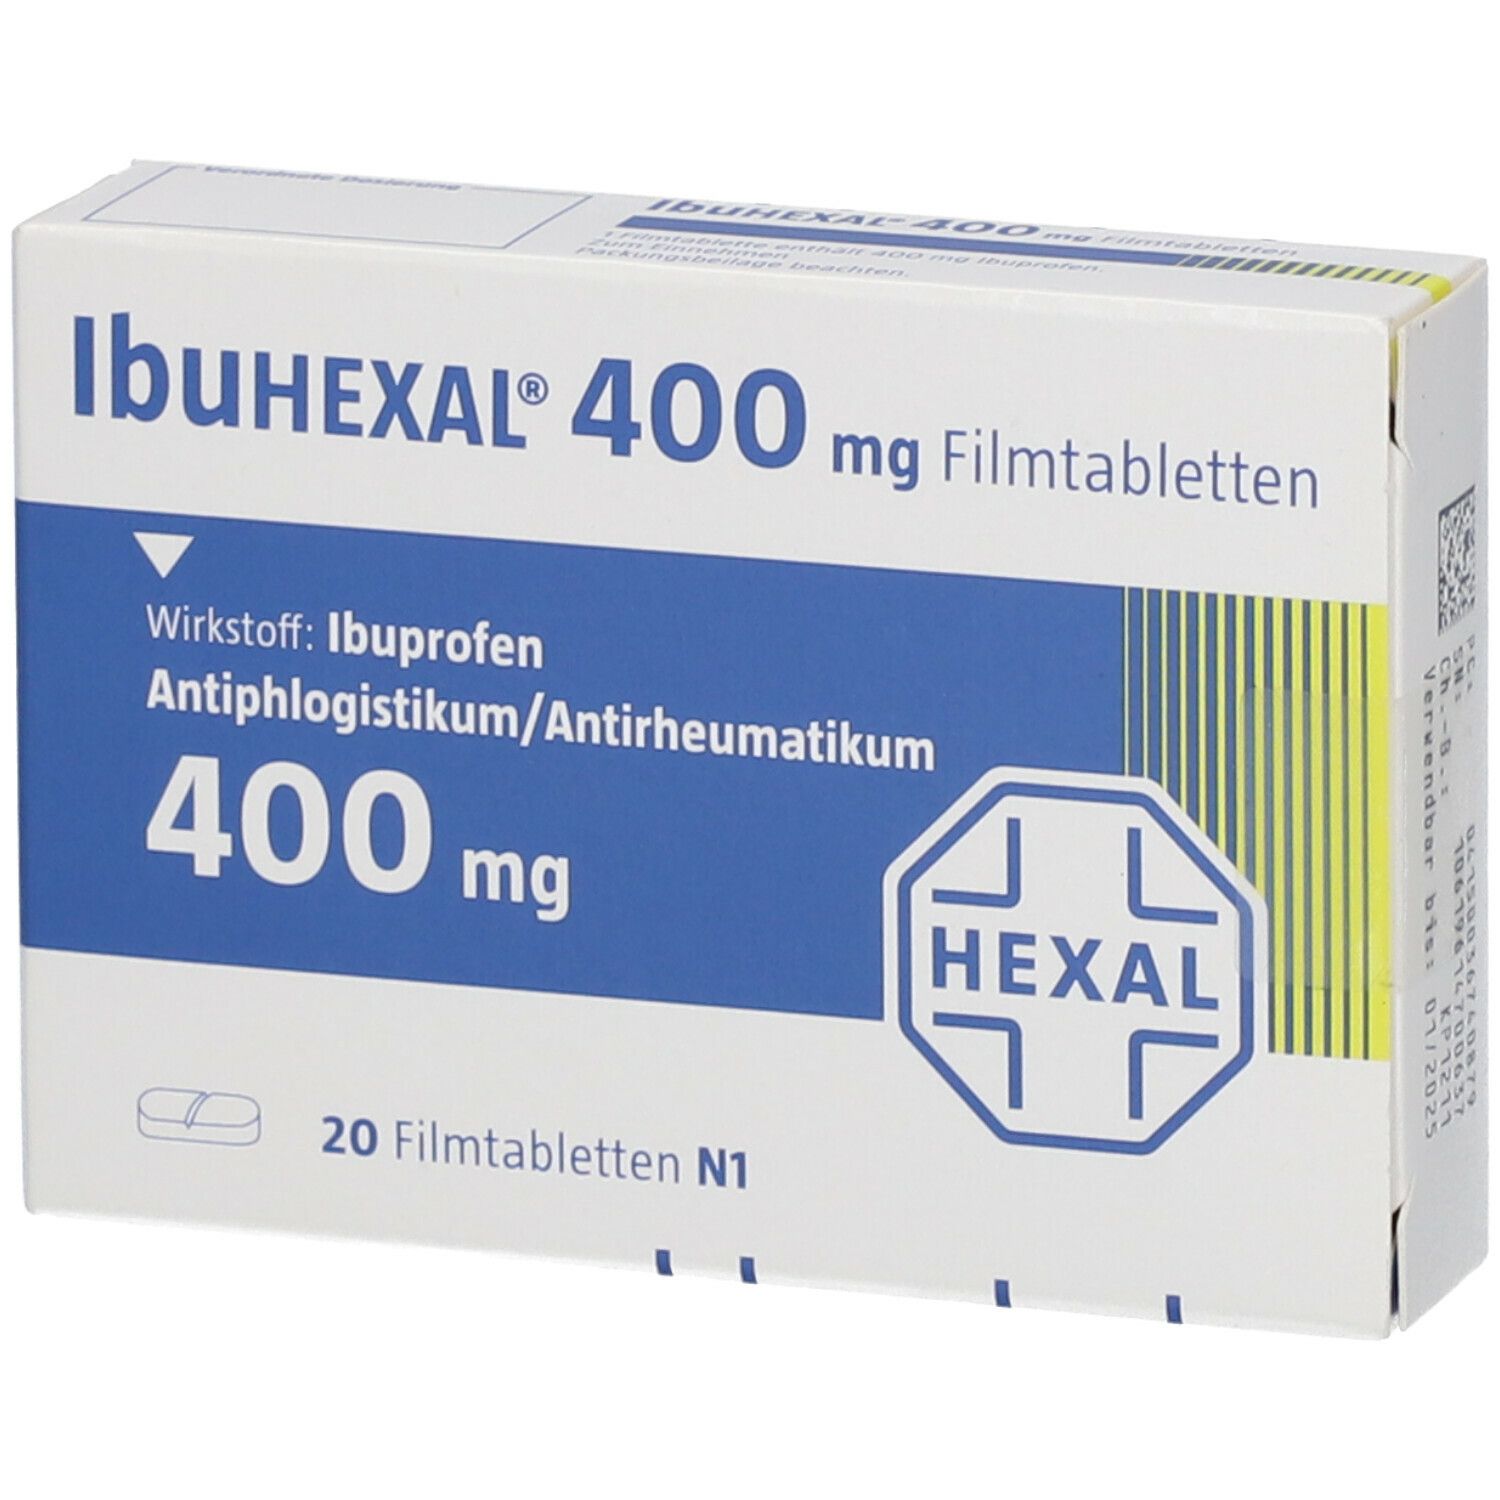 IbuHEXAL® 400 mg